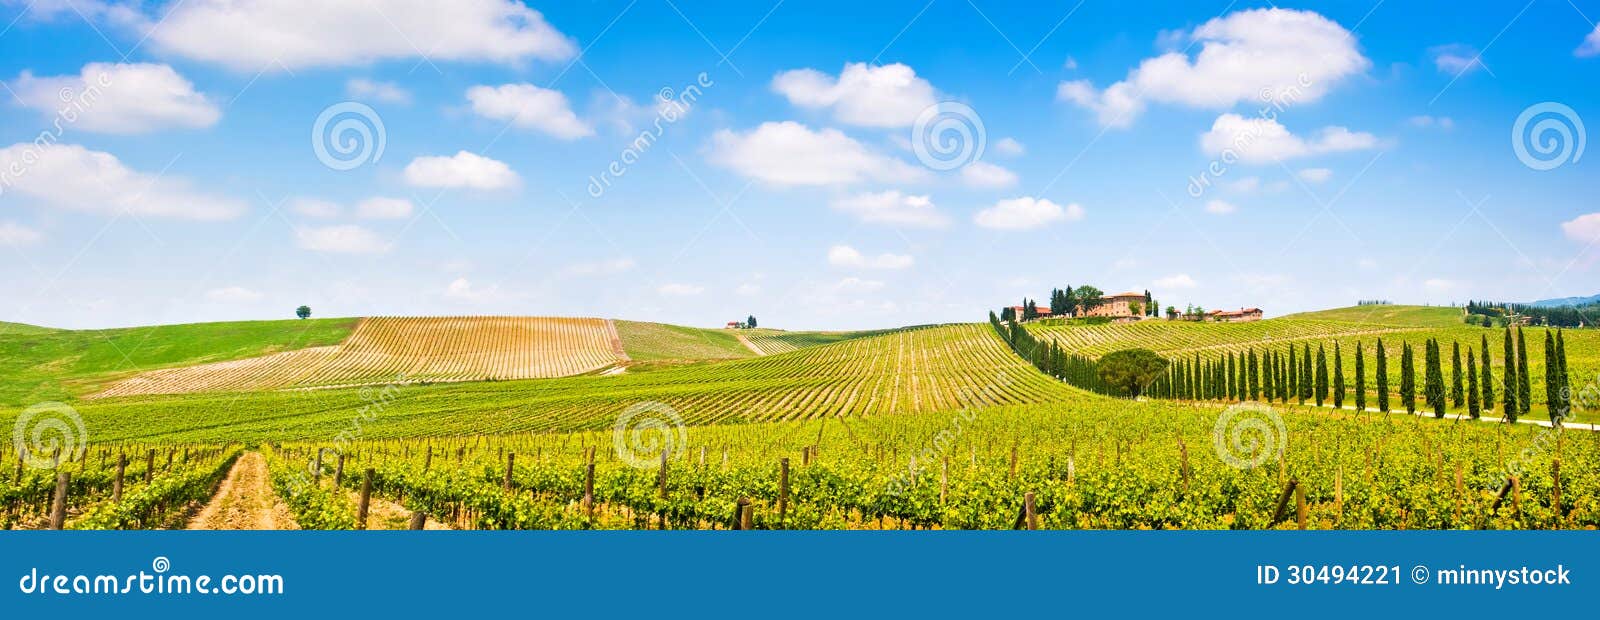 tuscany landscape panorama with vineyard in the chianti region, tuscany, italy